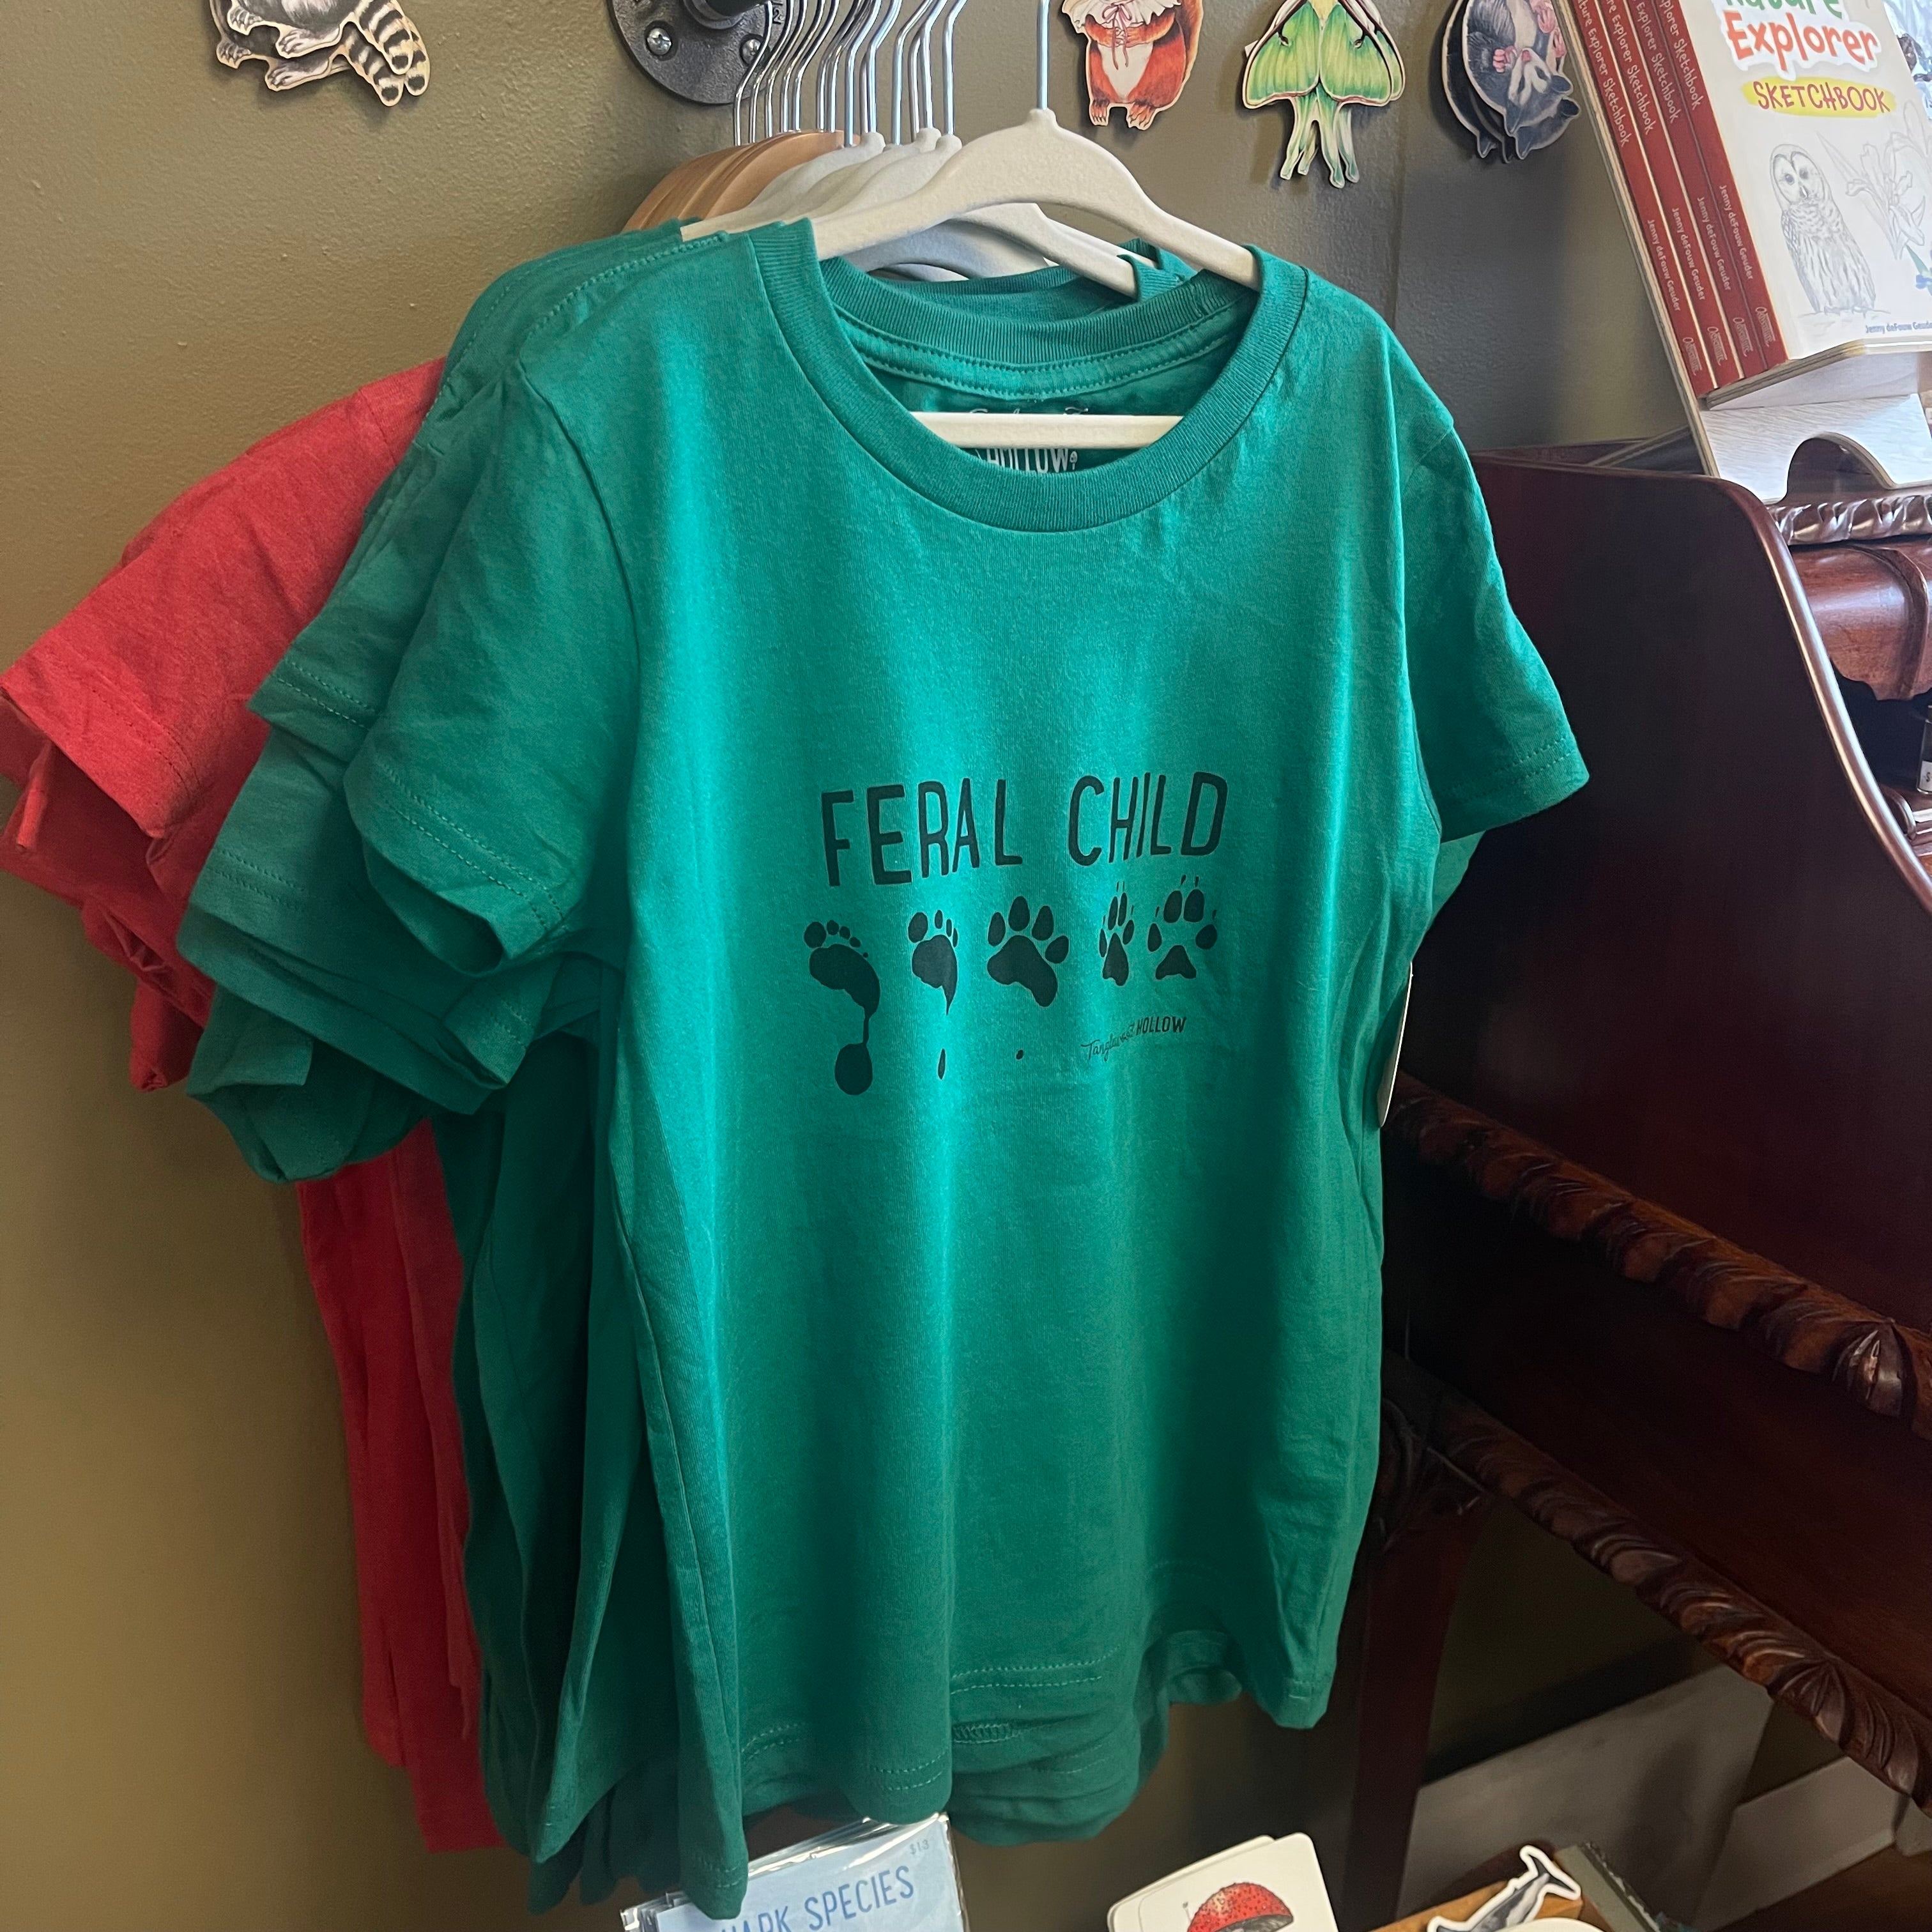 “Feral Child” Kids Graphic T-Shirt